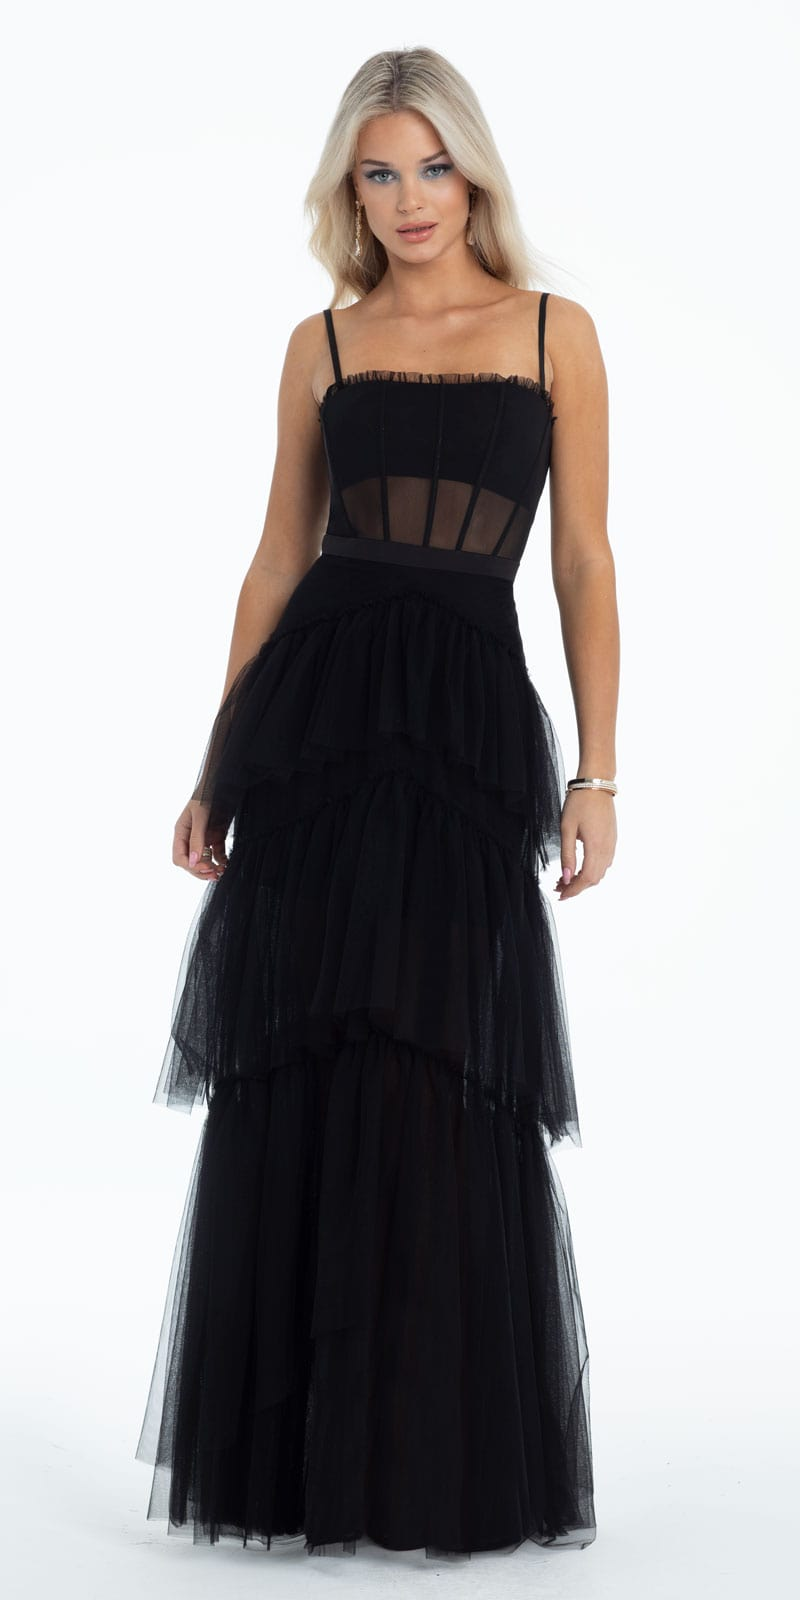 Camille La Vie Sheer Mesh Corset Tiered A Line Dress missy / 6 / black